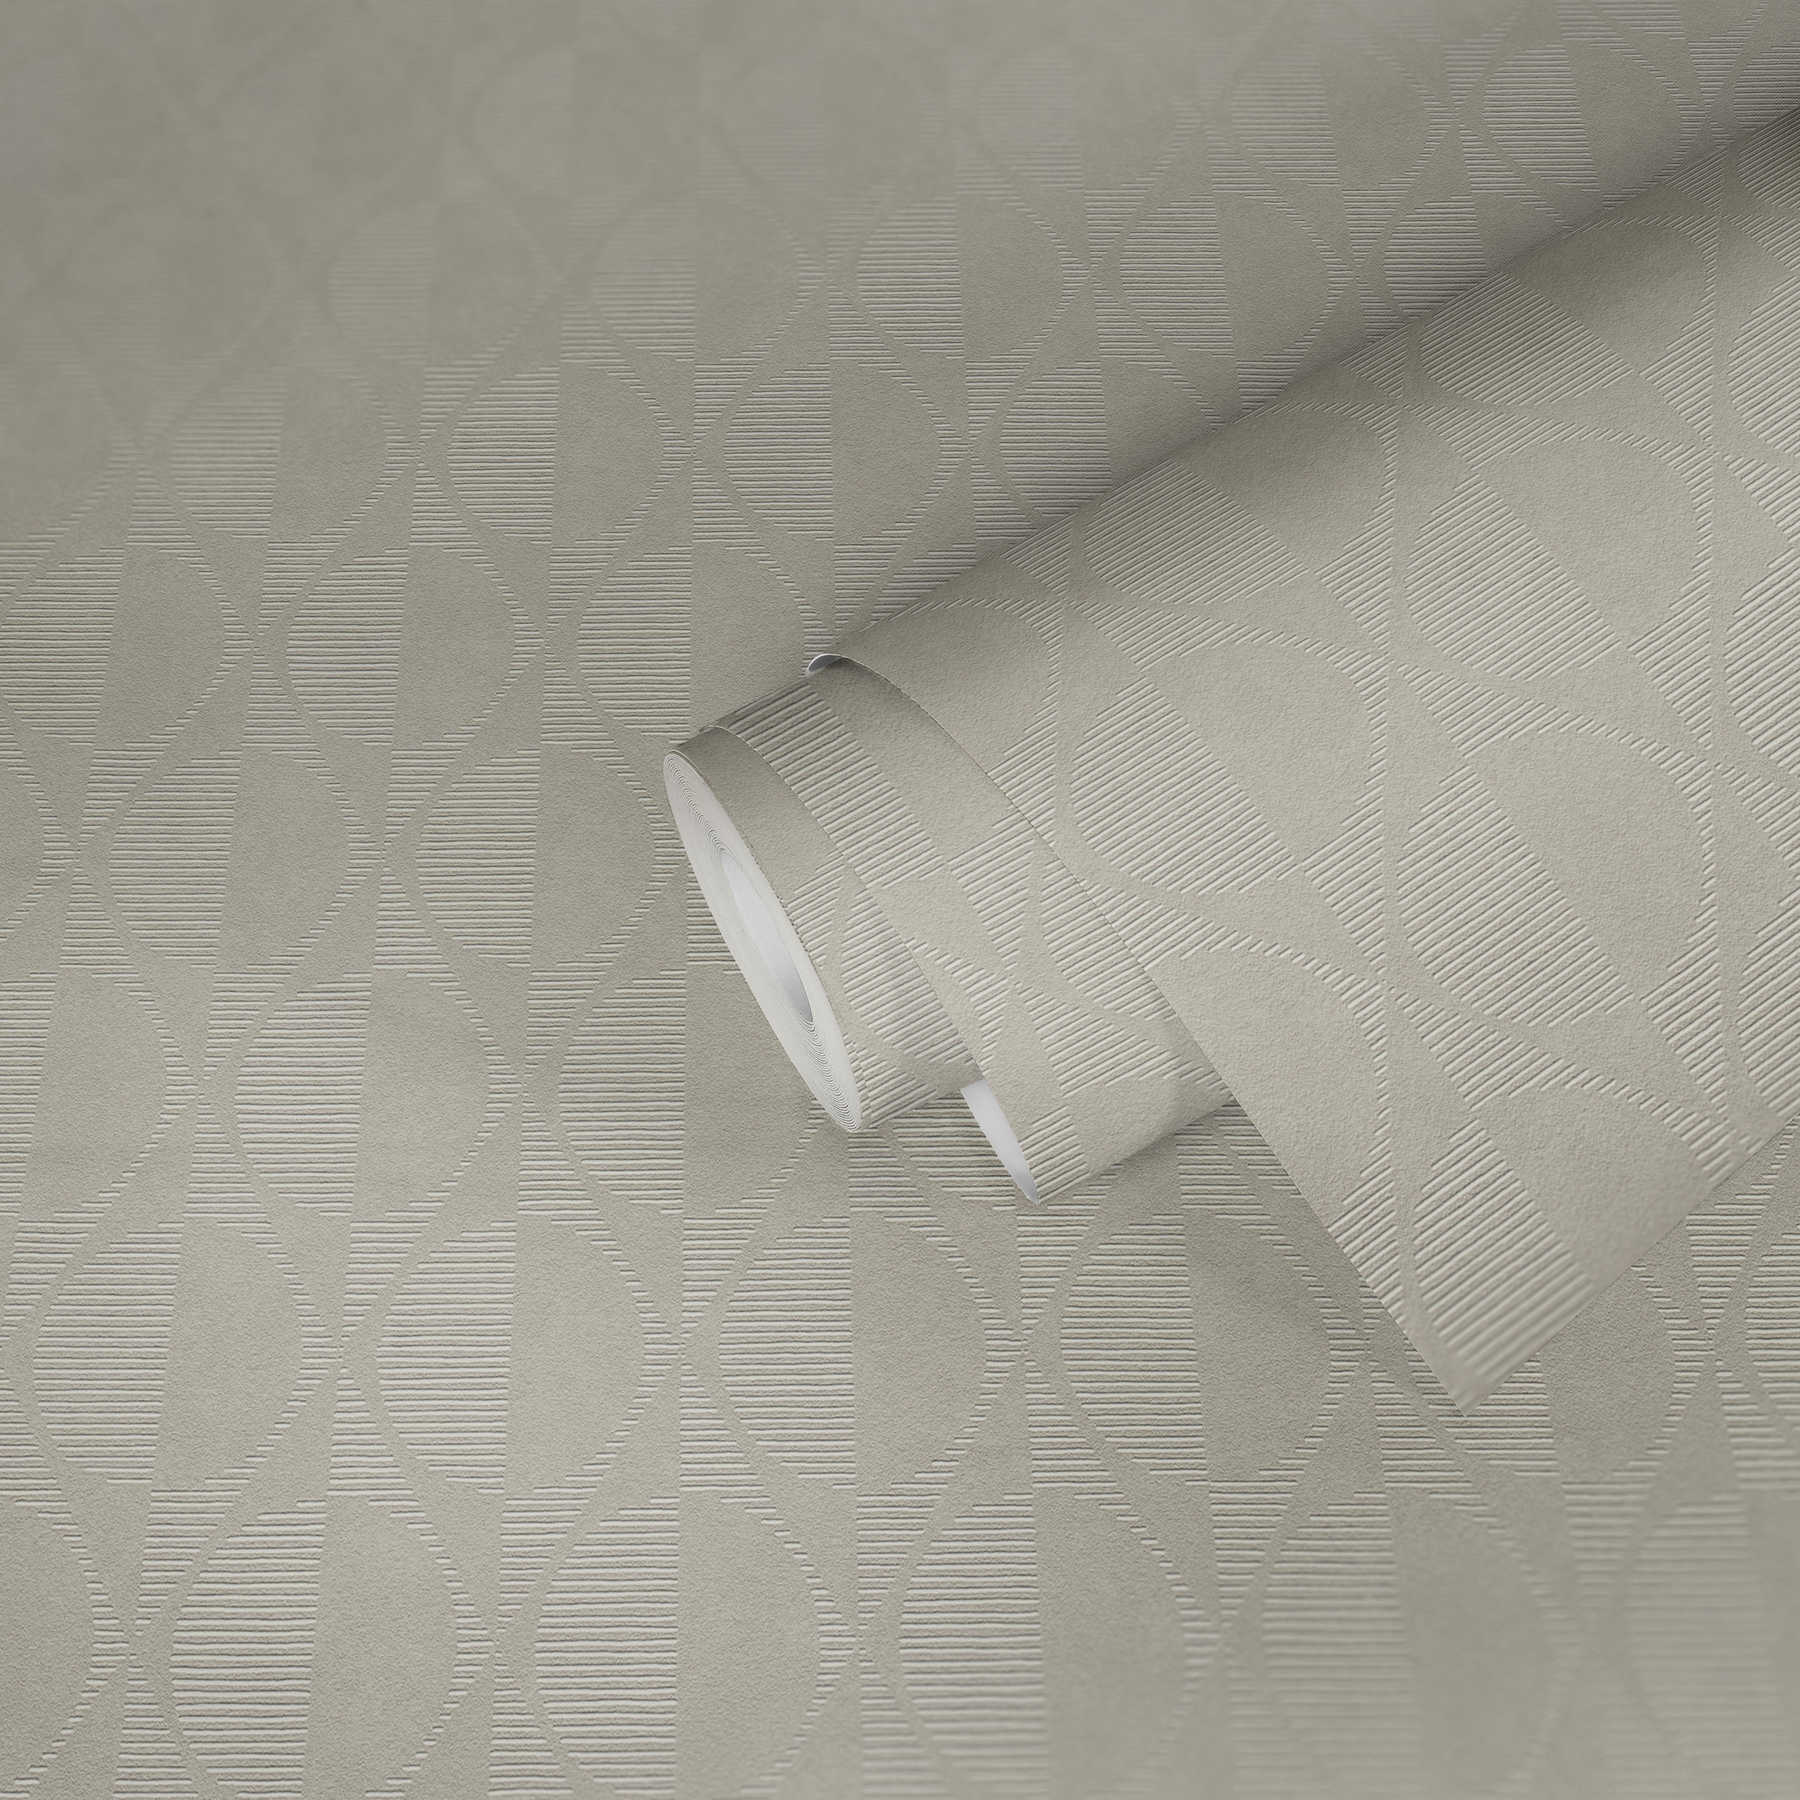             Retro wallpaper with symmetrical pattern - beige, grey, cream
        